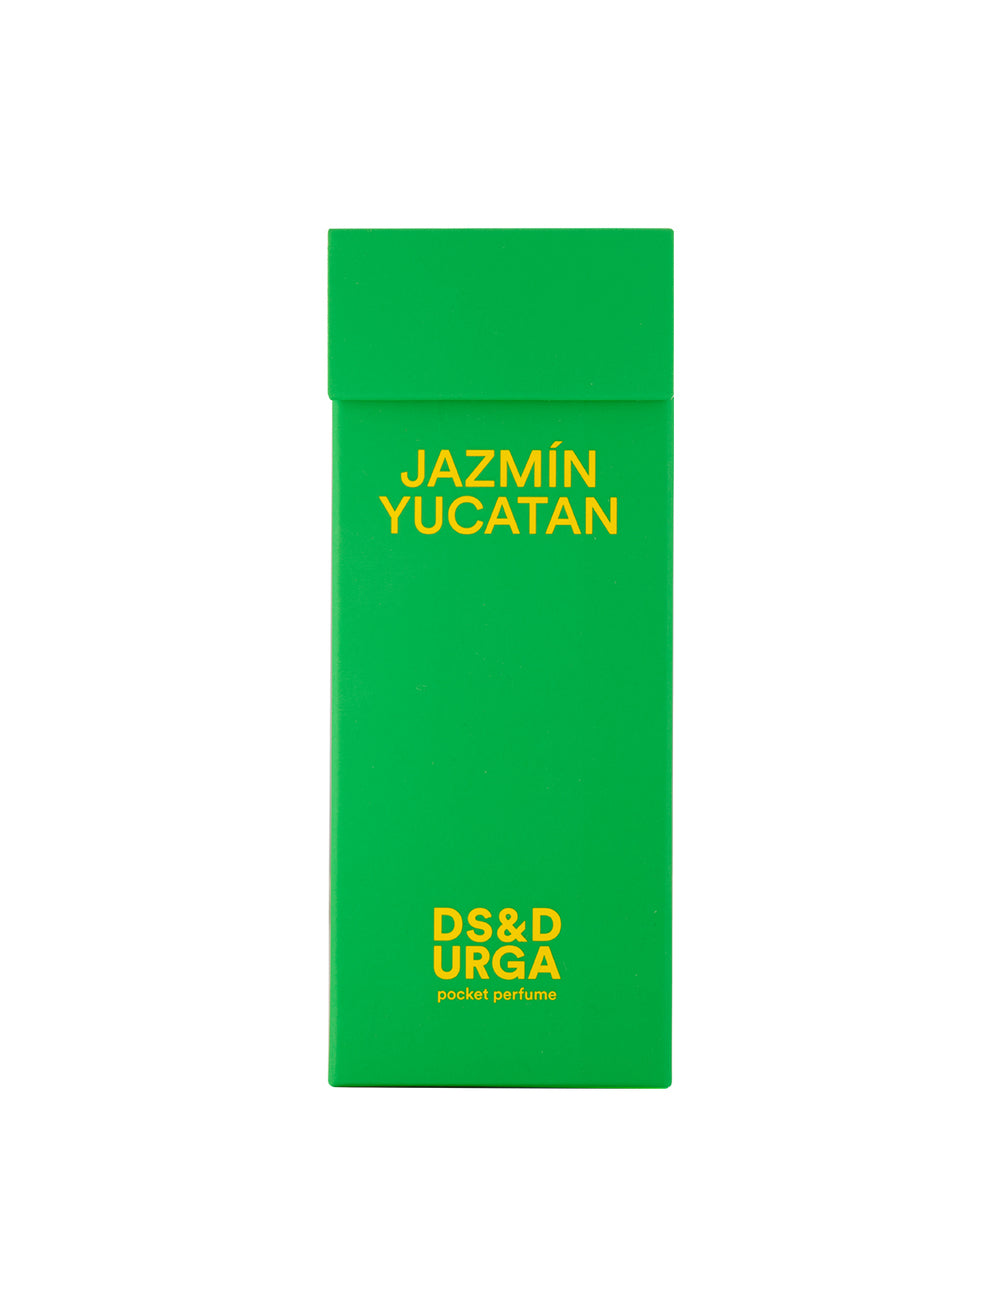 D.S. & Durga's jazmin yucatan pocket perfume.